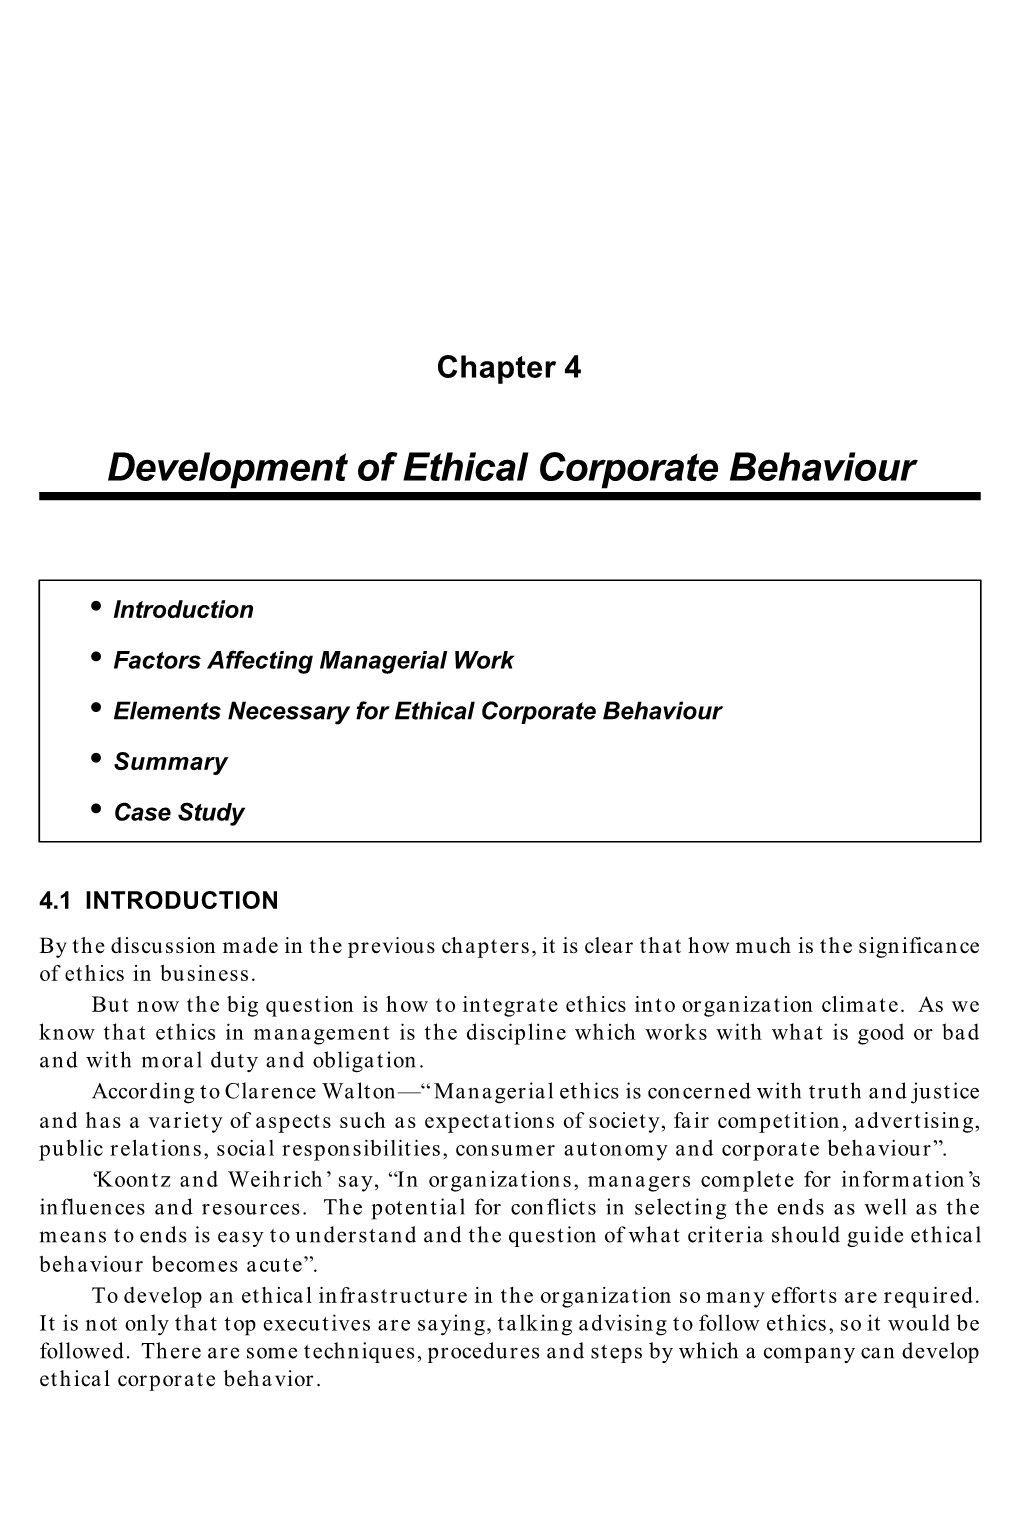 Development of Ethical Corporate Behaviour